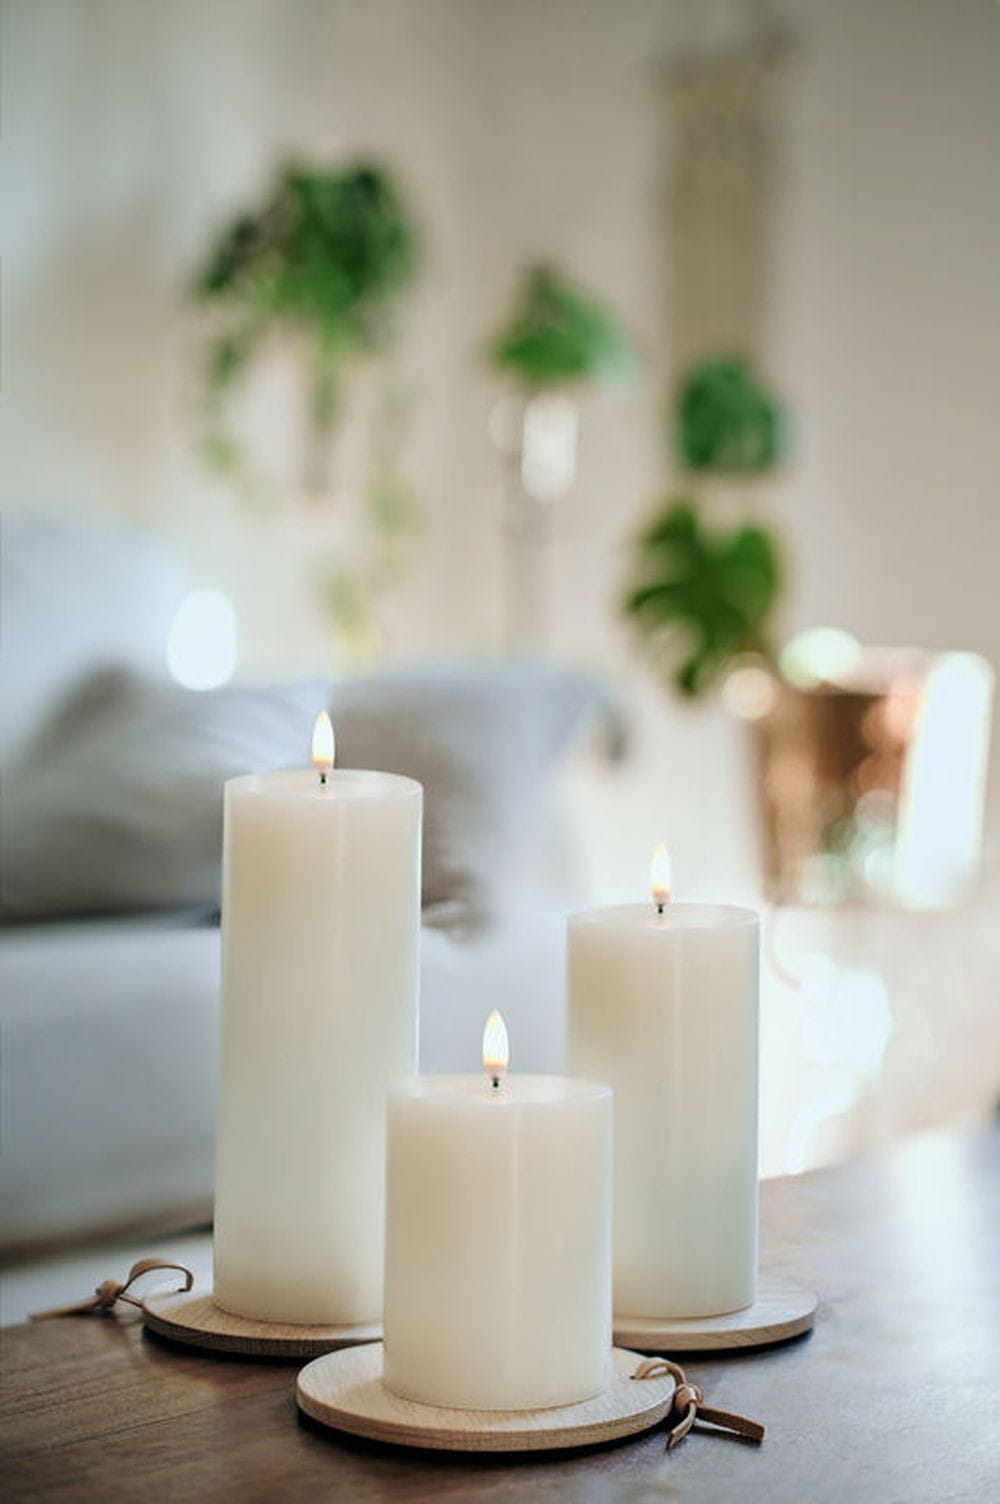 Uyuni Lighting Led Pillar Candle 3 D Flame 5,8x10,1 Cm, Nordic White